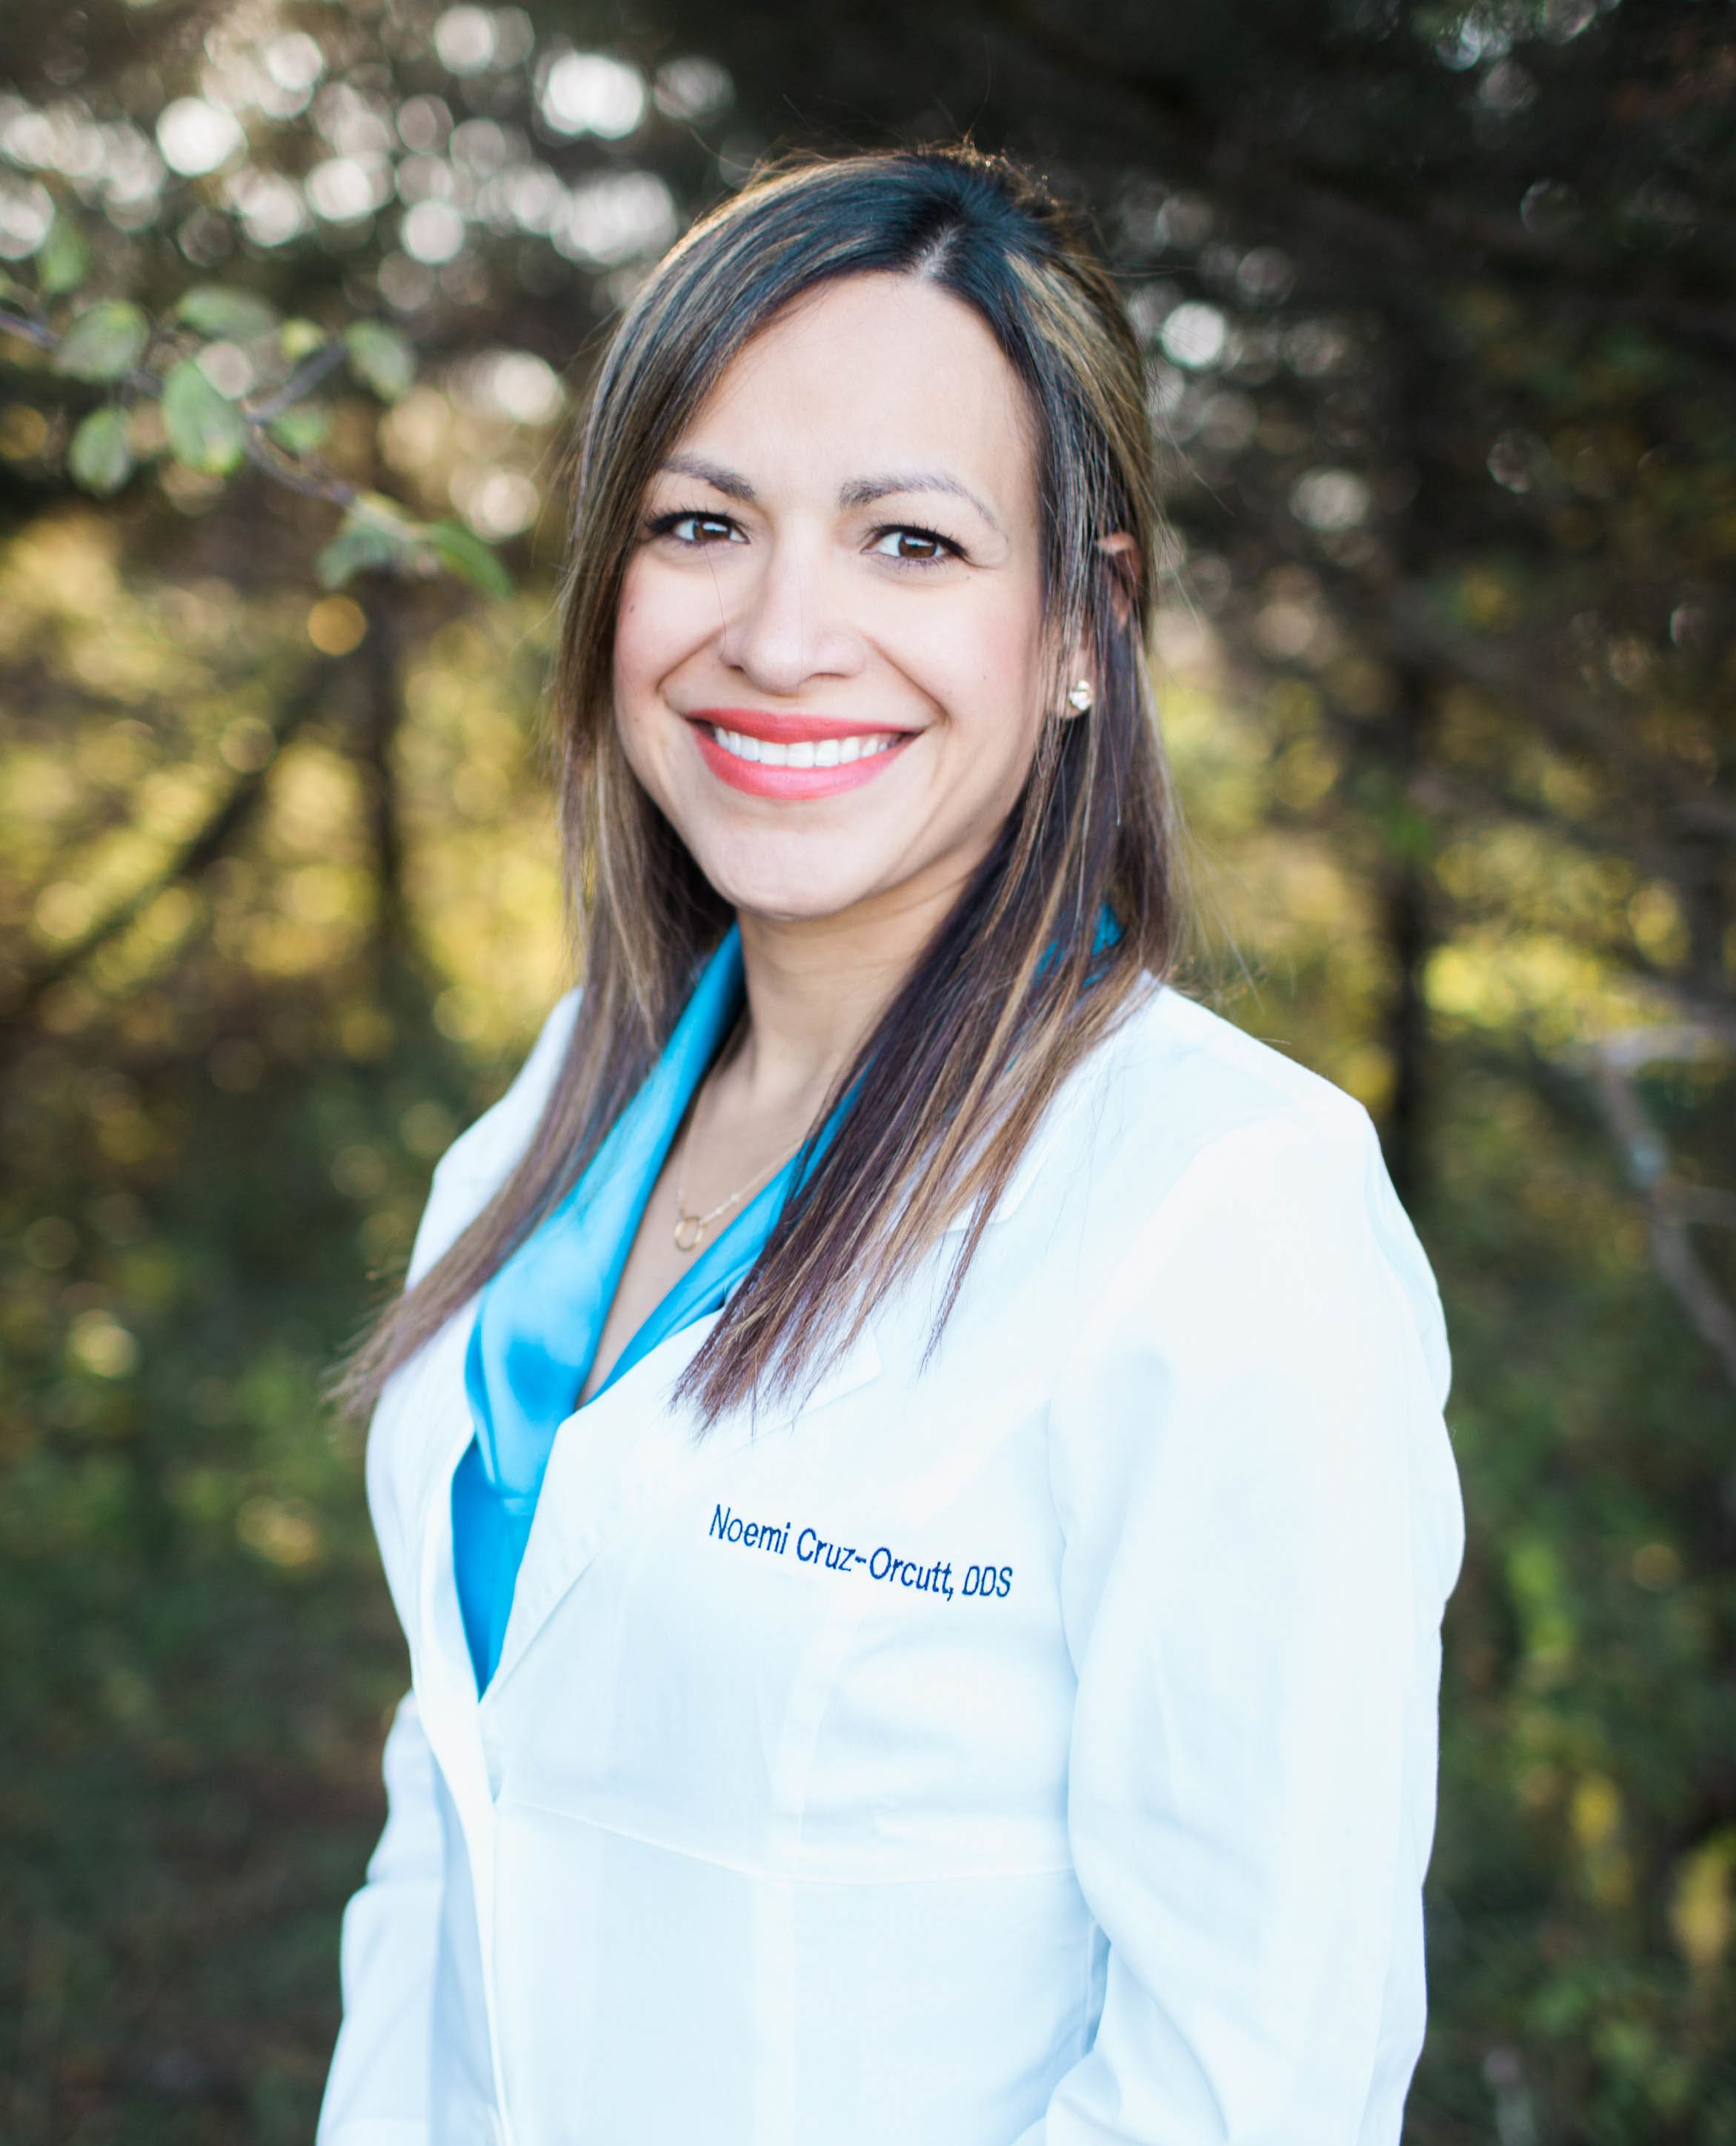 Dr. Noemi Cruz-Orcutt, DDS